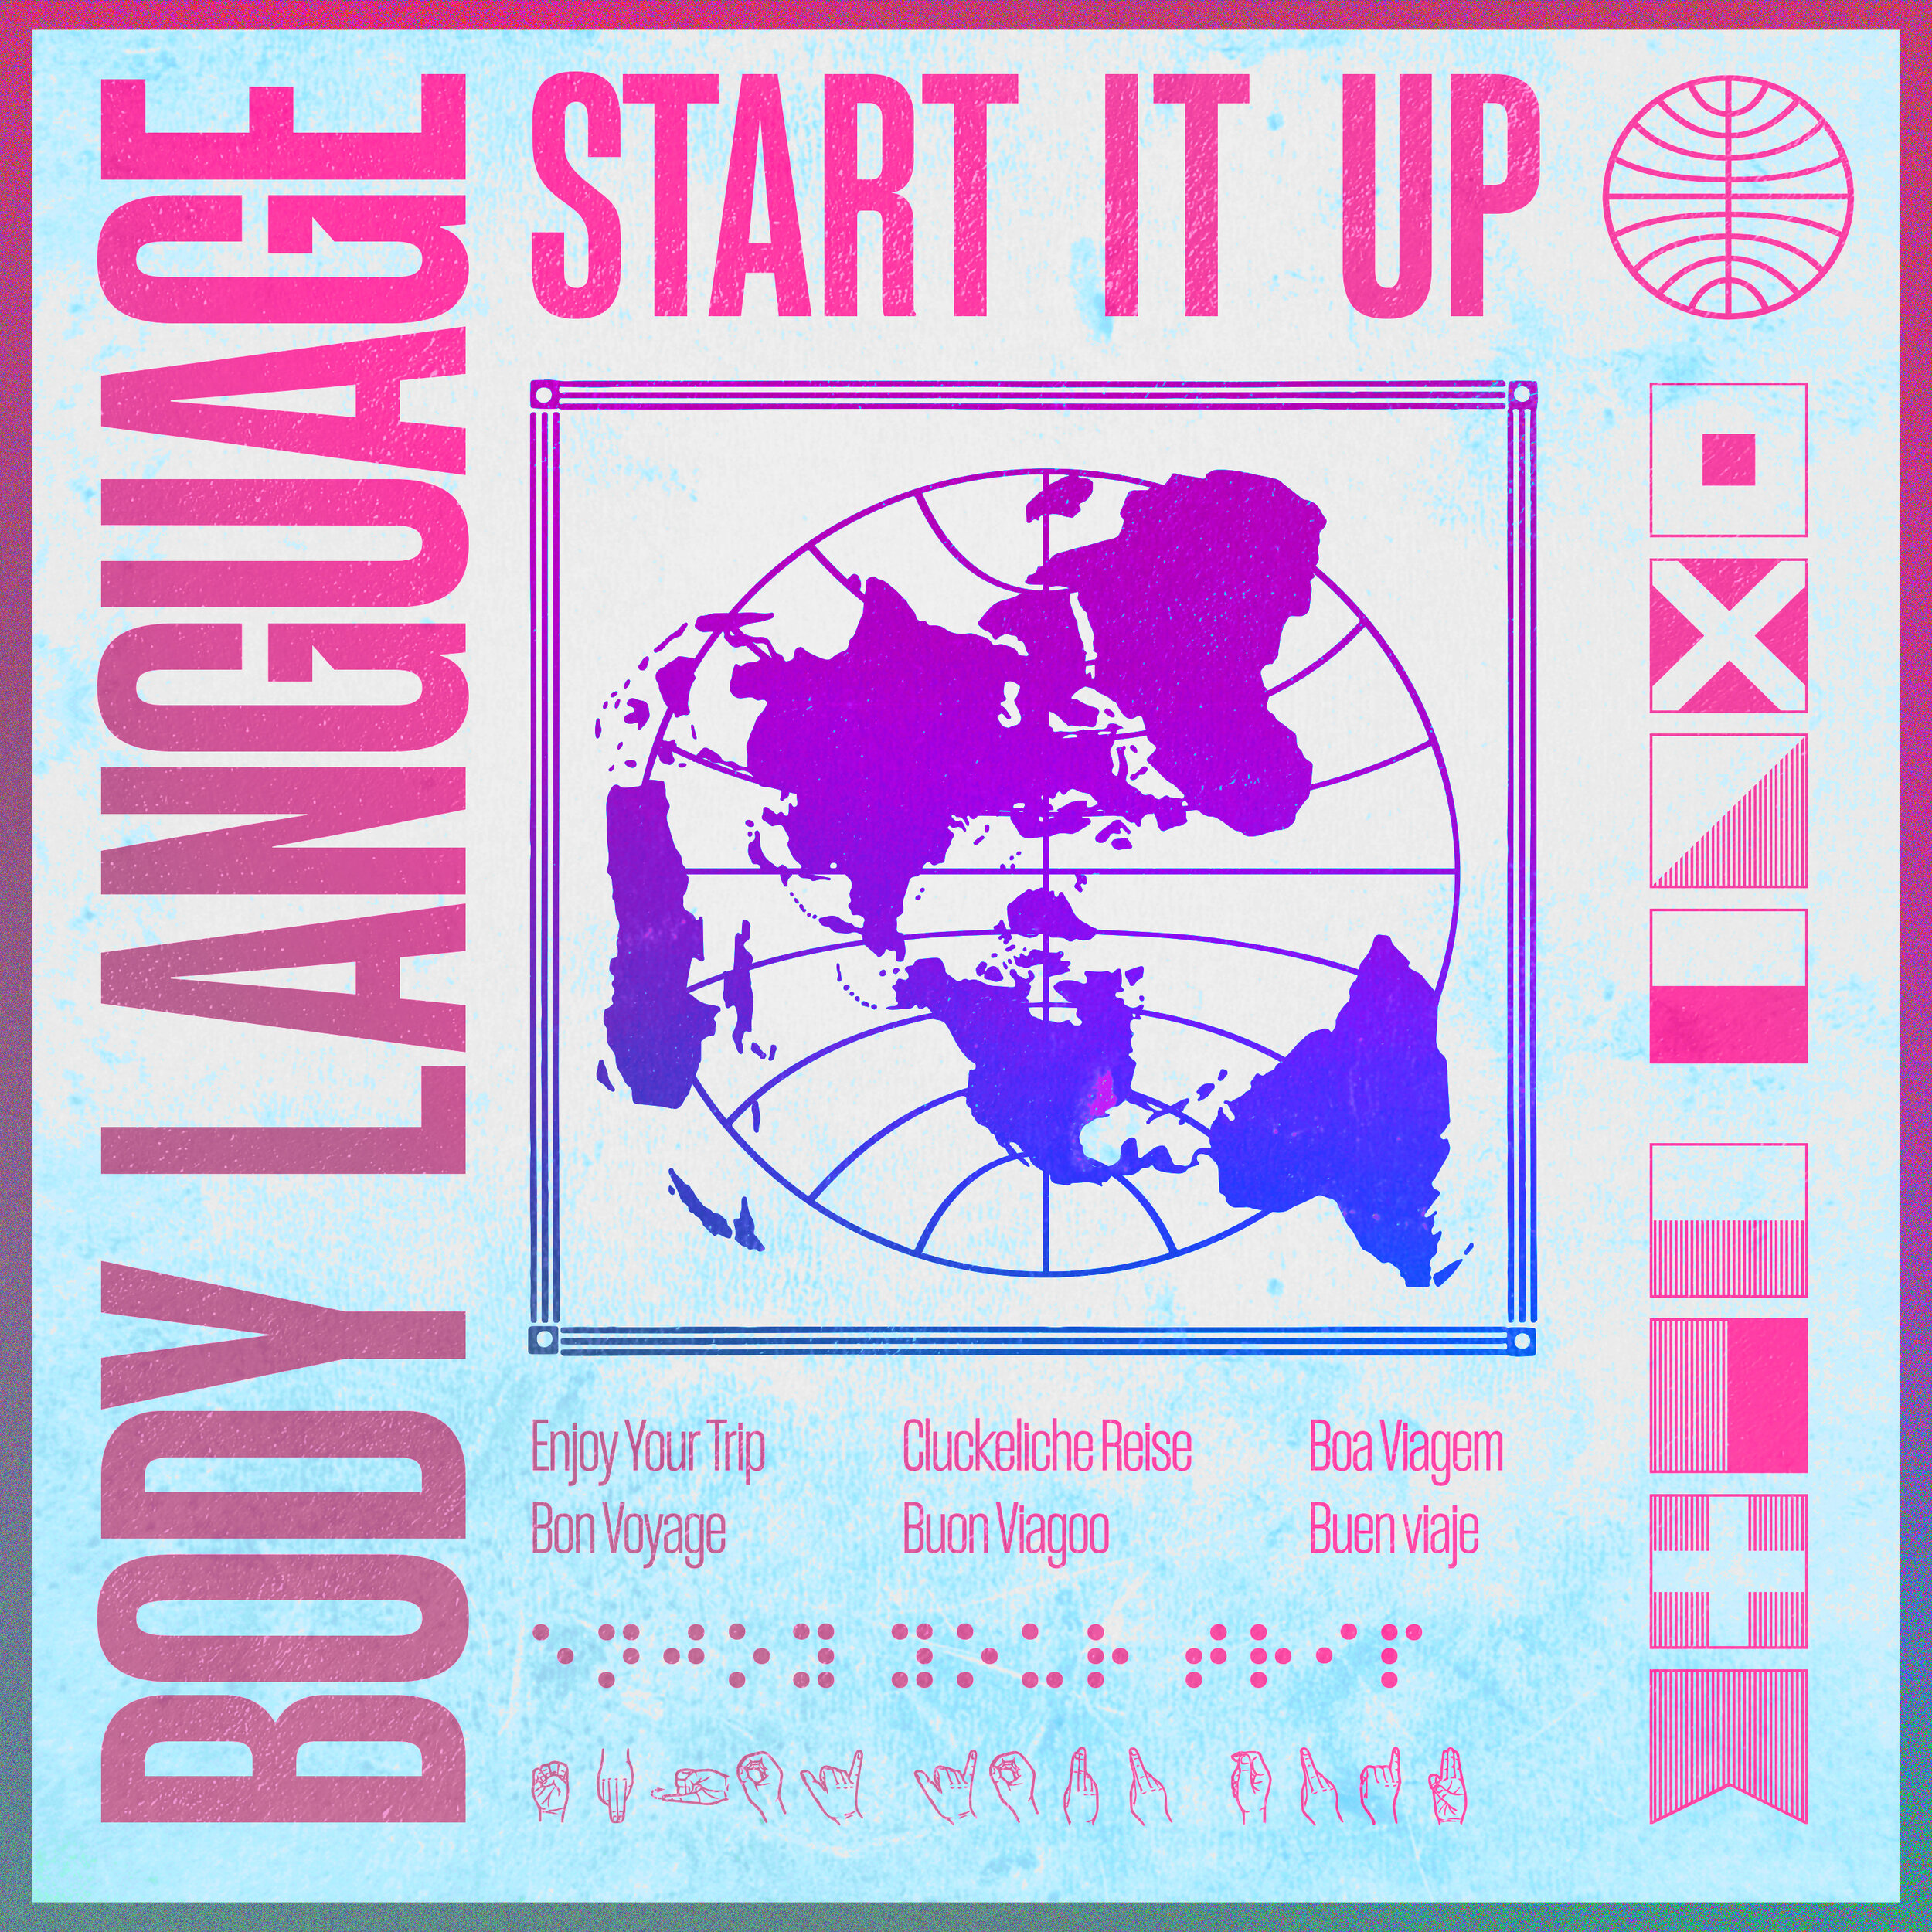 Body Language - Start It Up (J Boogie's Dubtronic Science Remix)